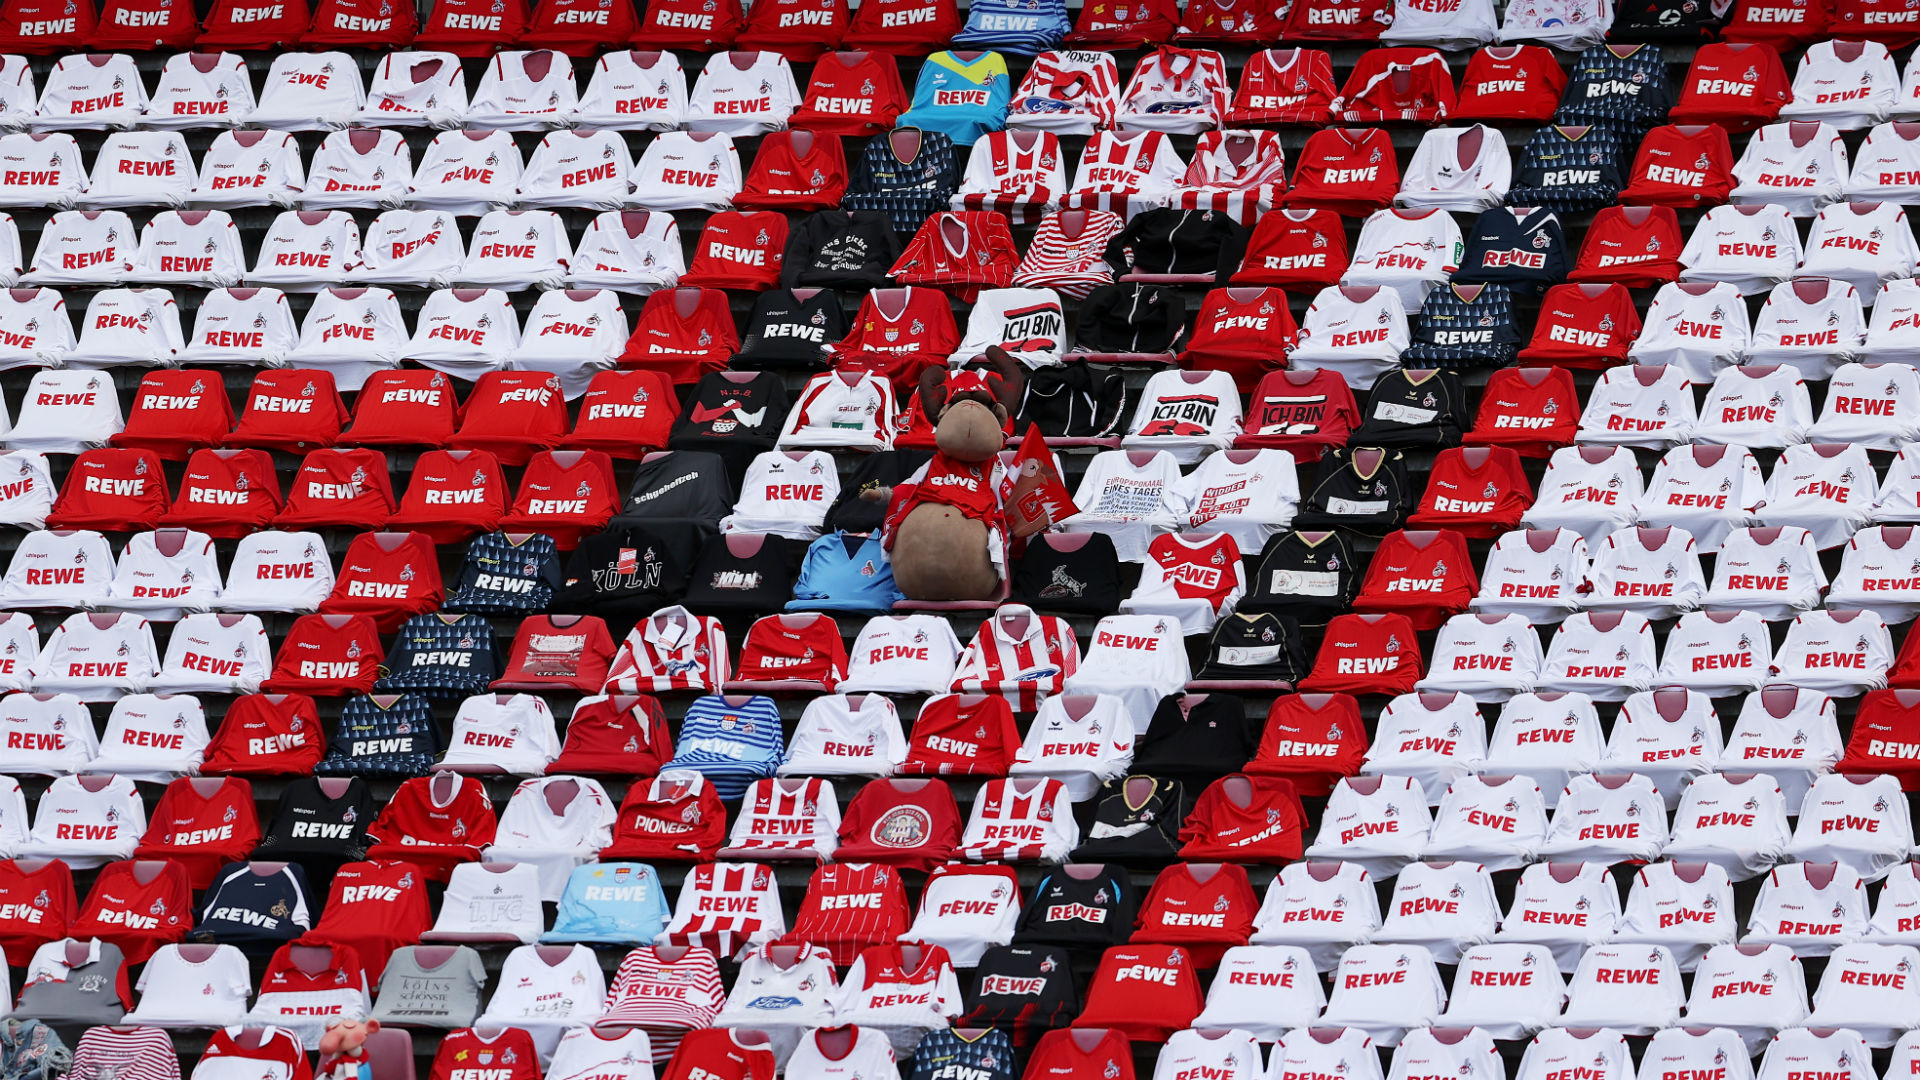 Koln make tifo in stands from fans' shirts and scarves on Bundesliga return